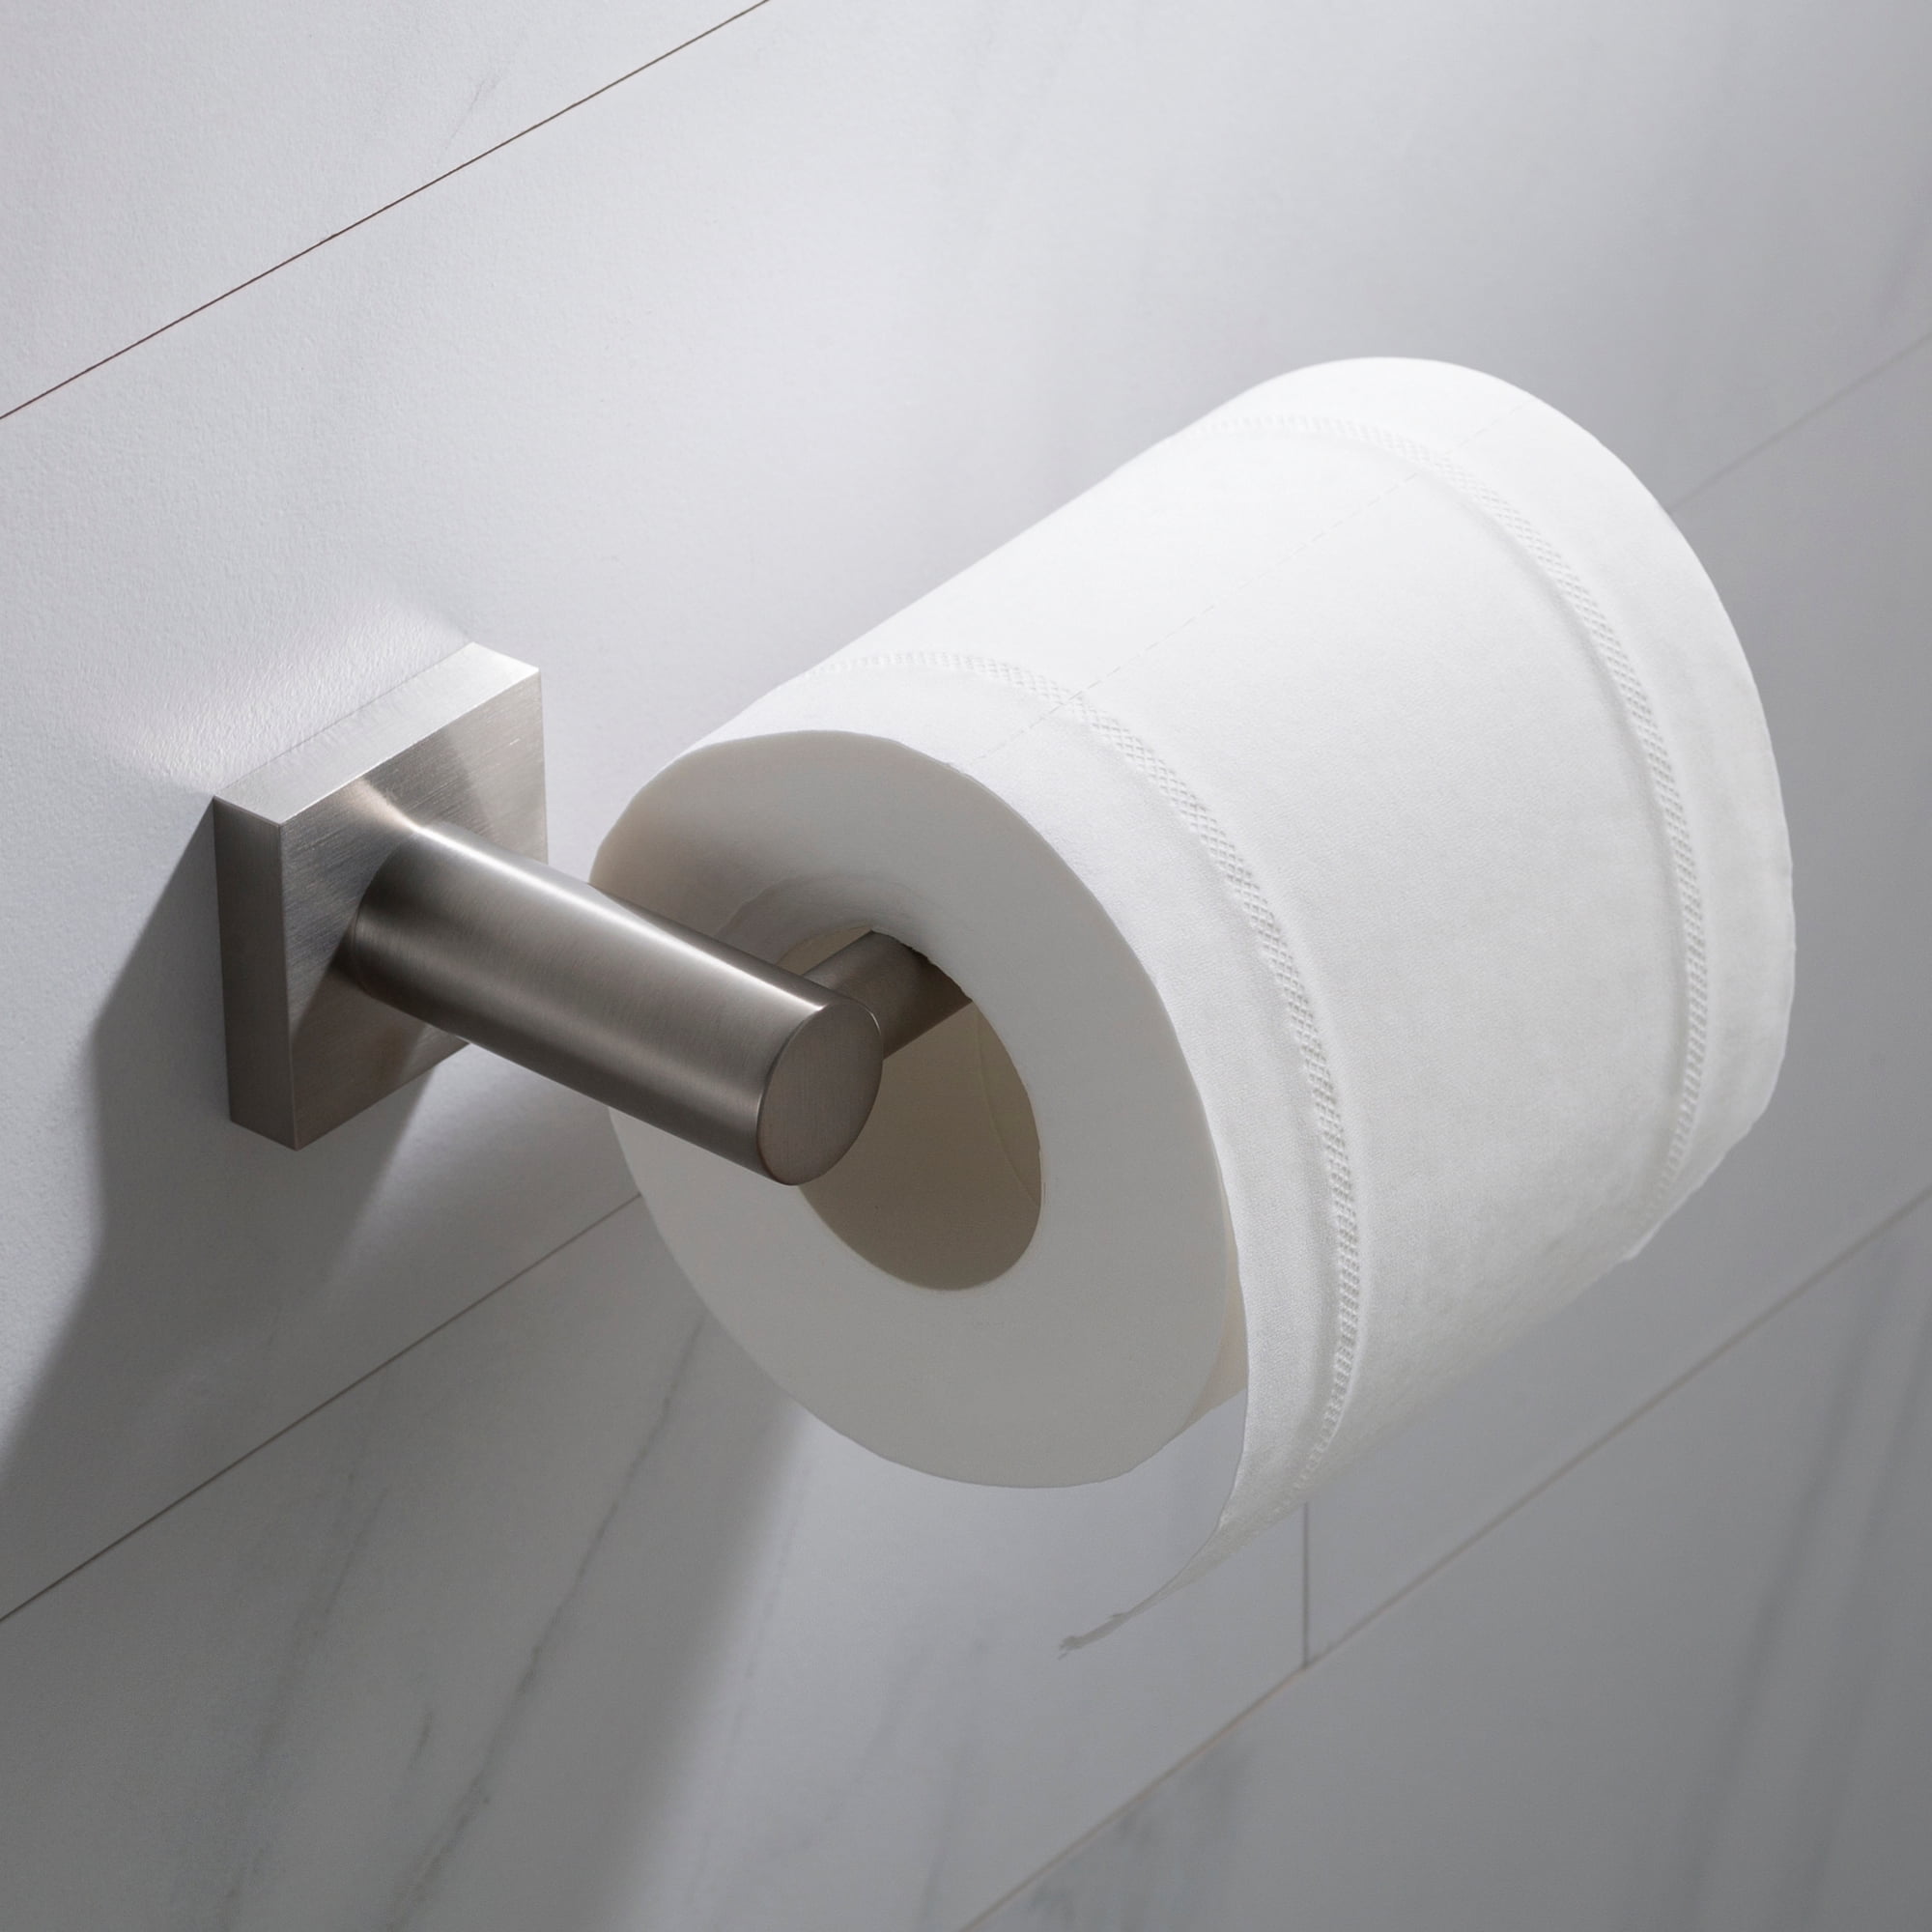 Brushed Nickel Bath Accessory Toilet Roll Tissue Paper Holder Bathroom Hardware for sale online 